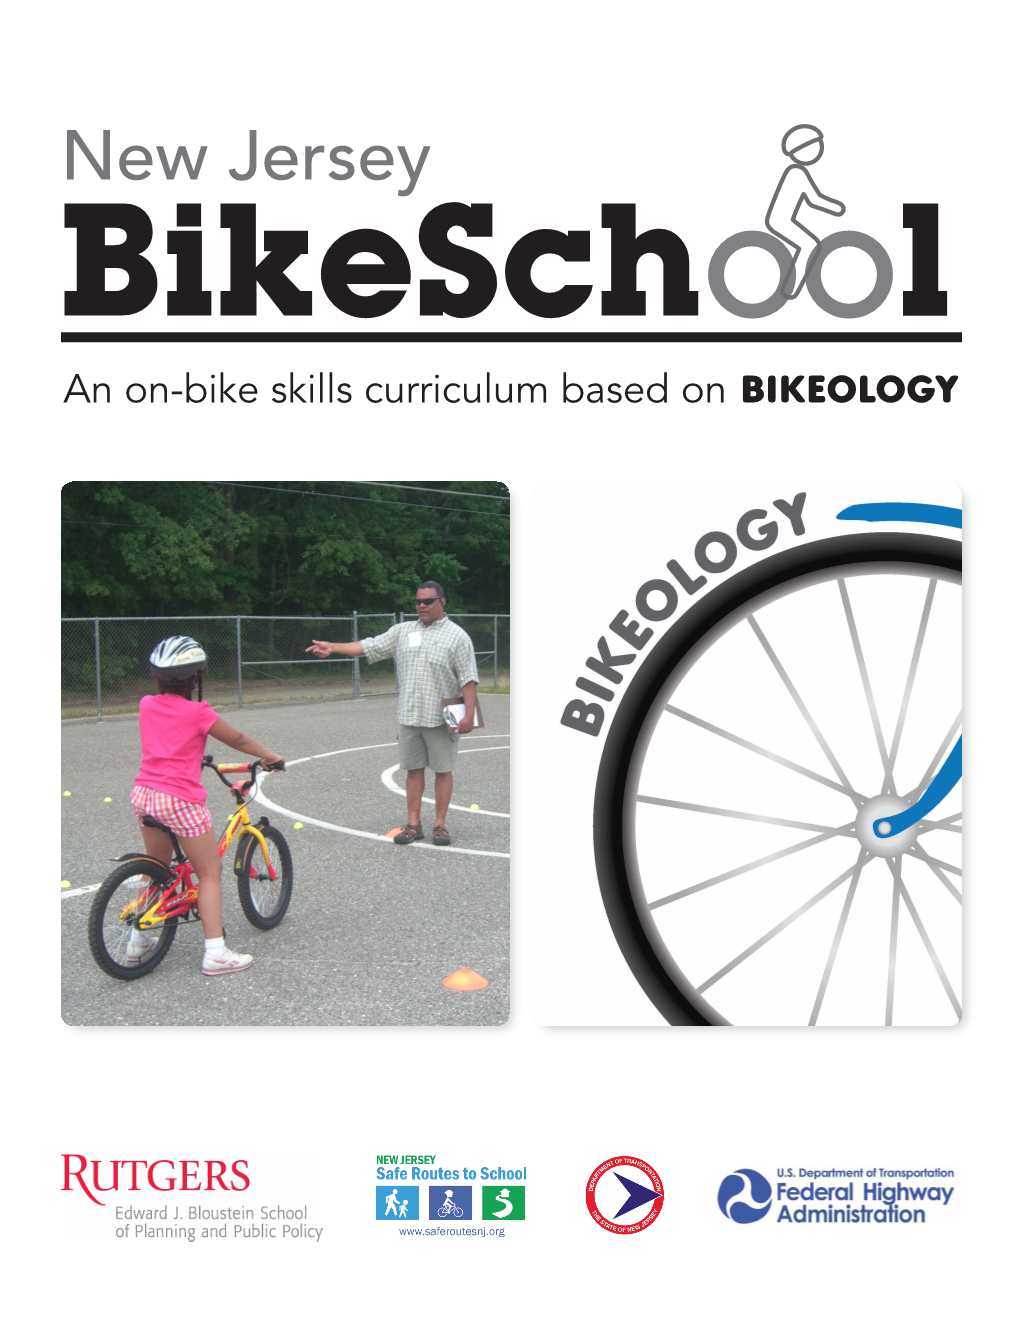 NJ Bike School Curriculum for Grades 6-12